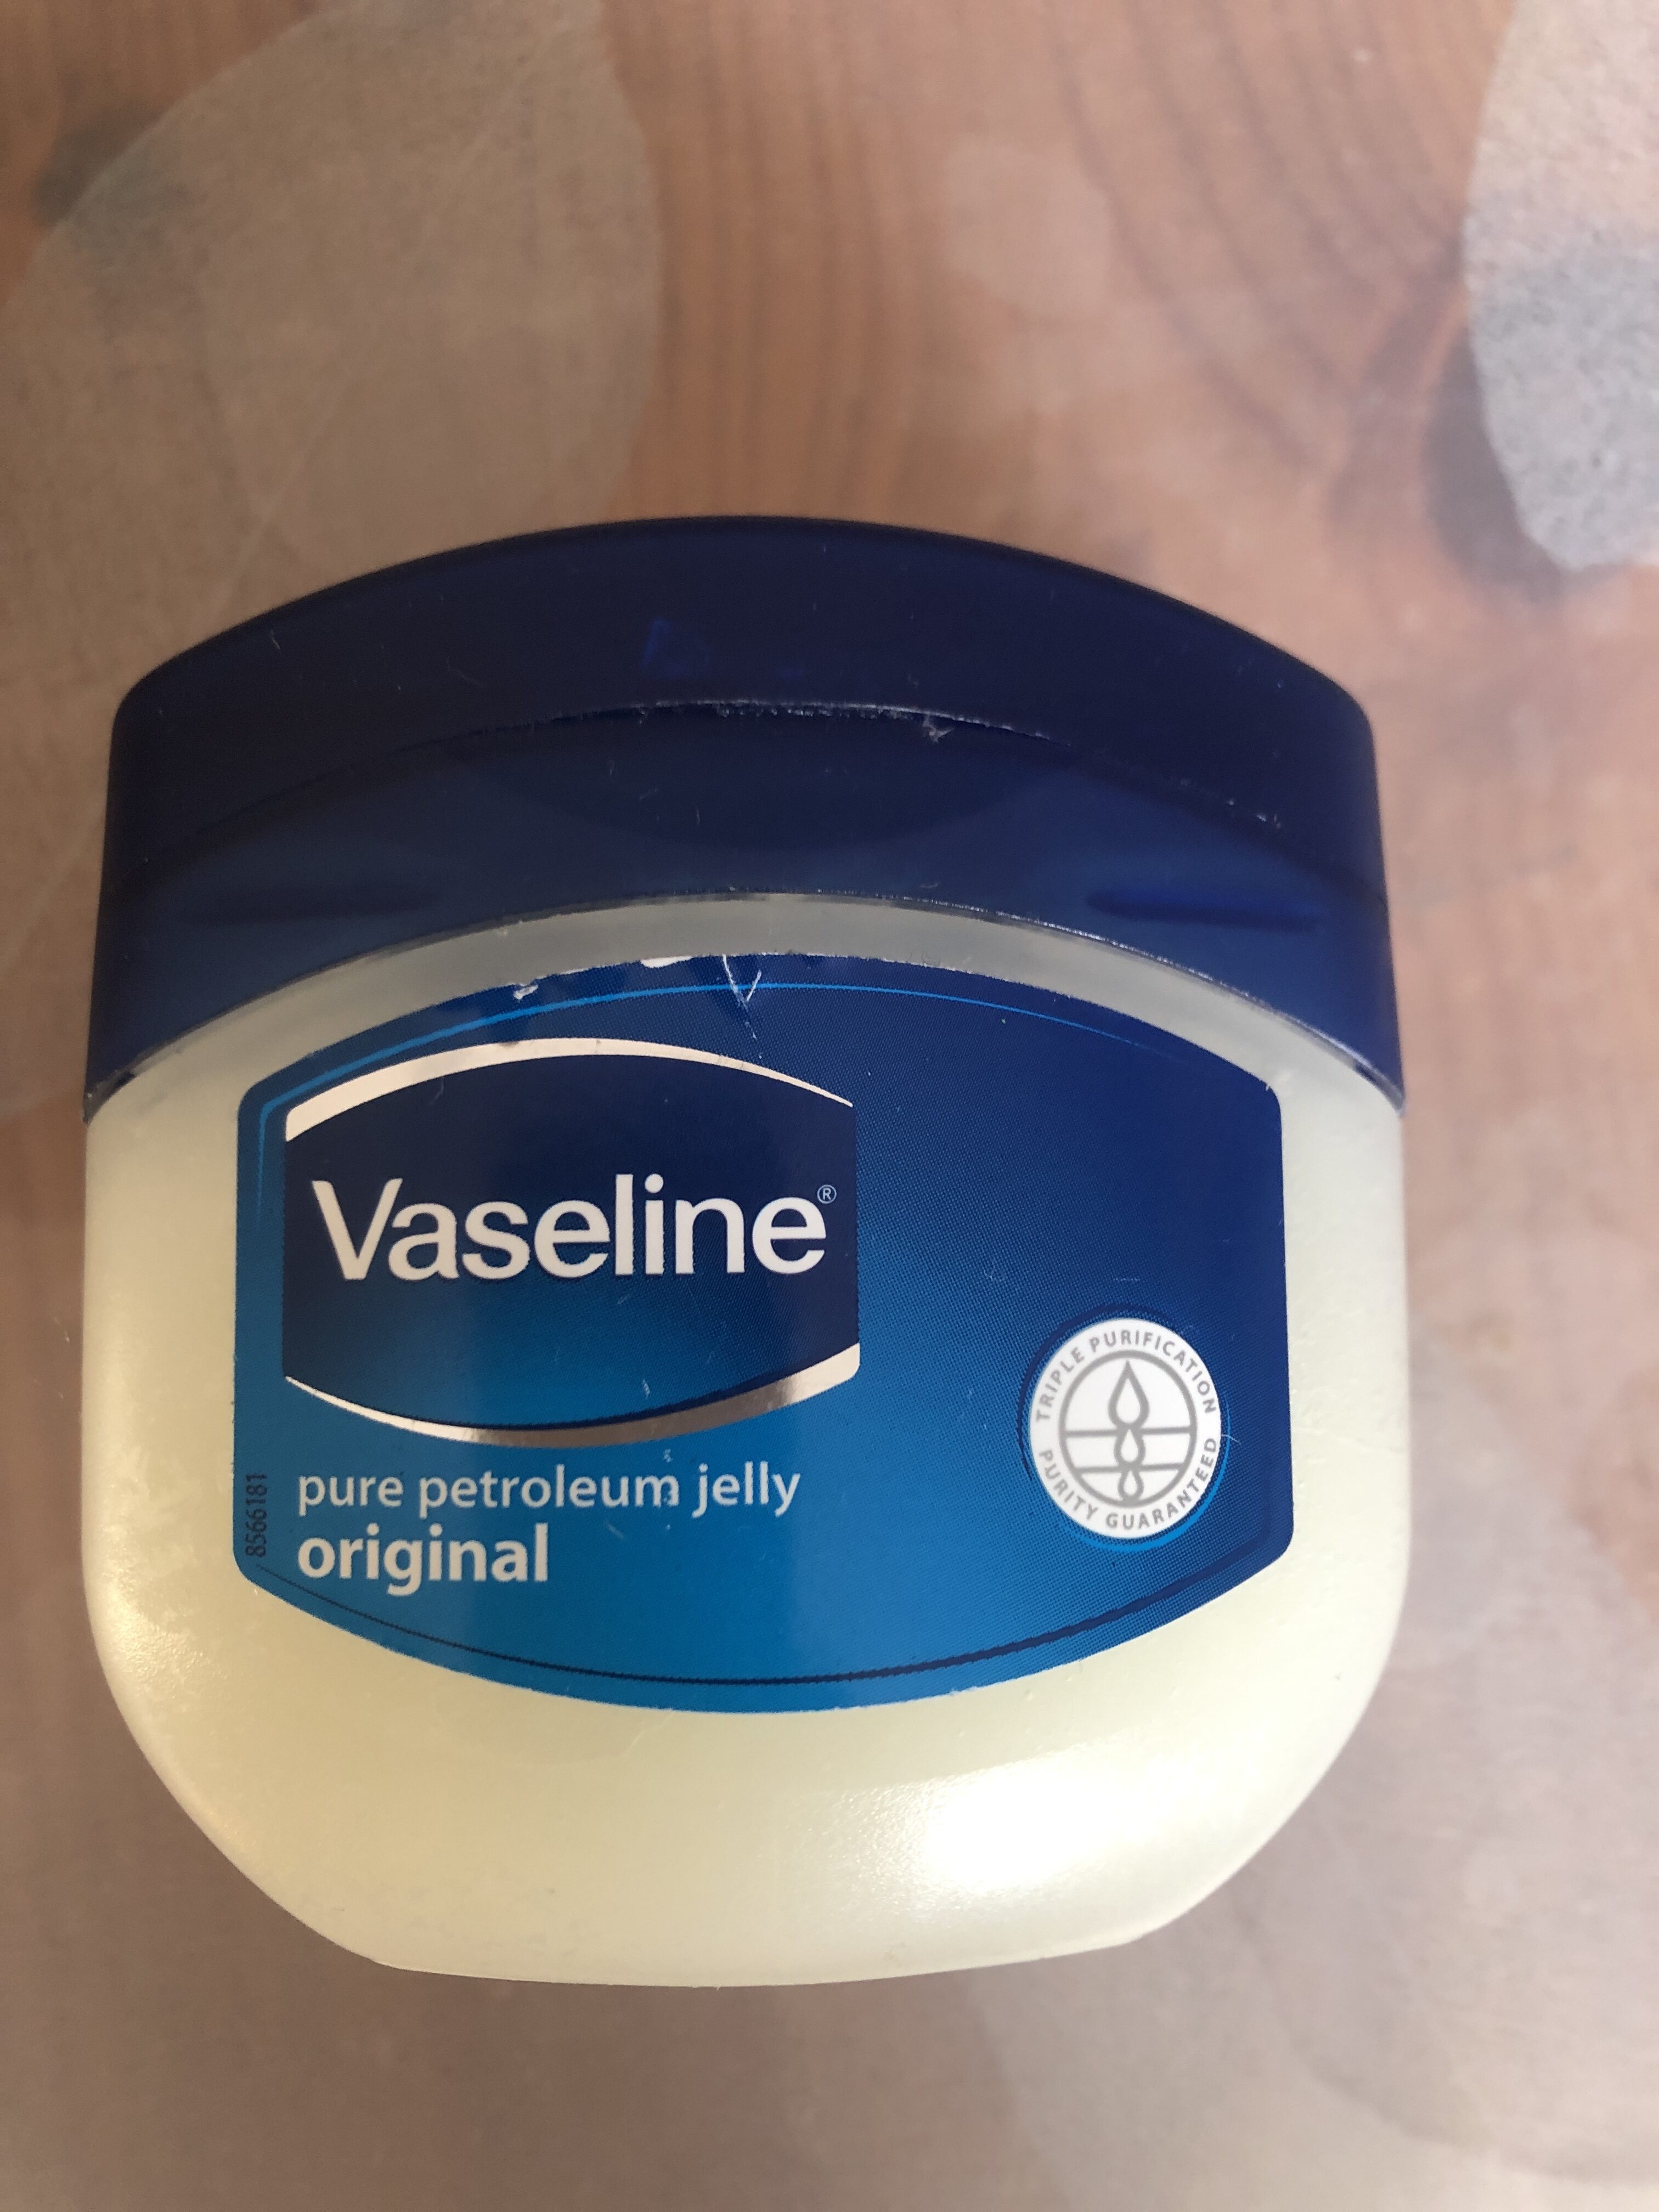 Vaseline - Product